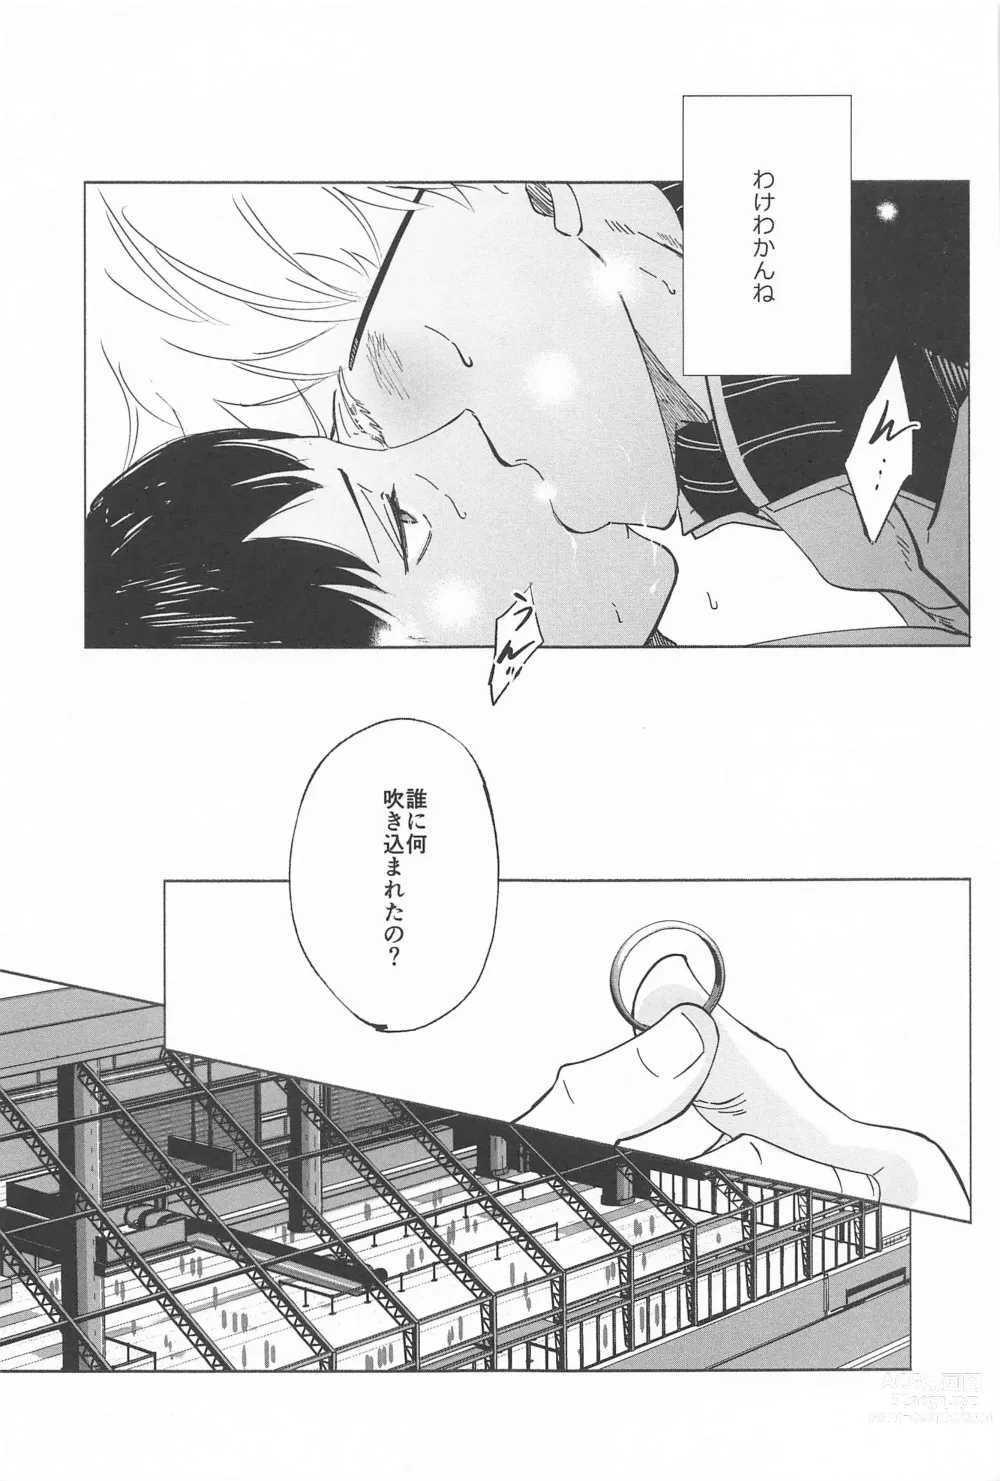 Page 13 of doujinshi Ketsui no Katachi